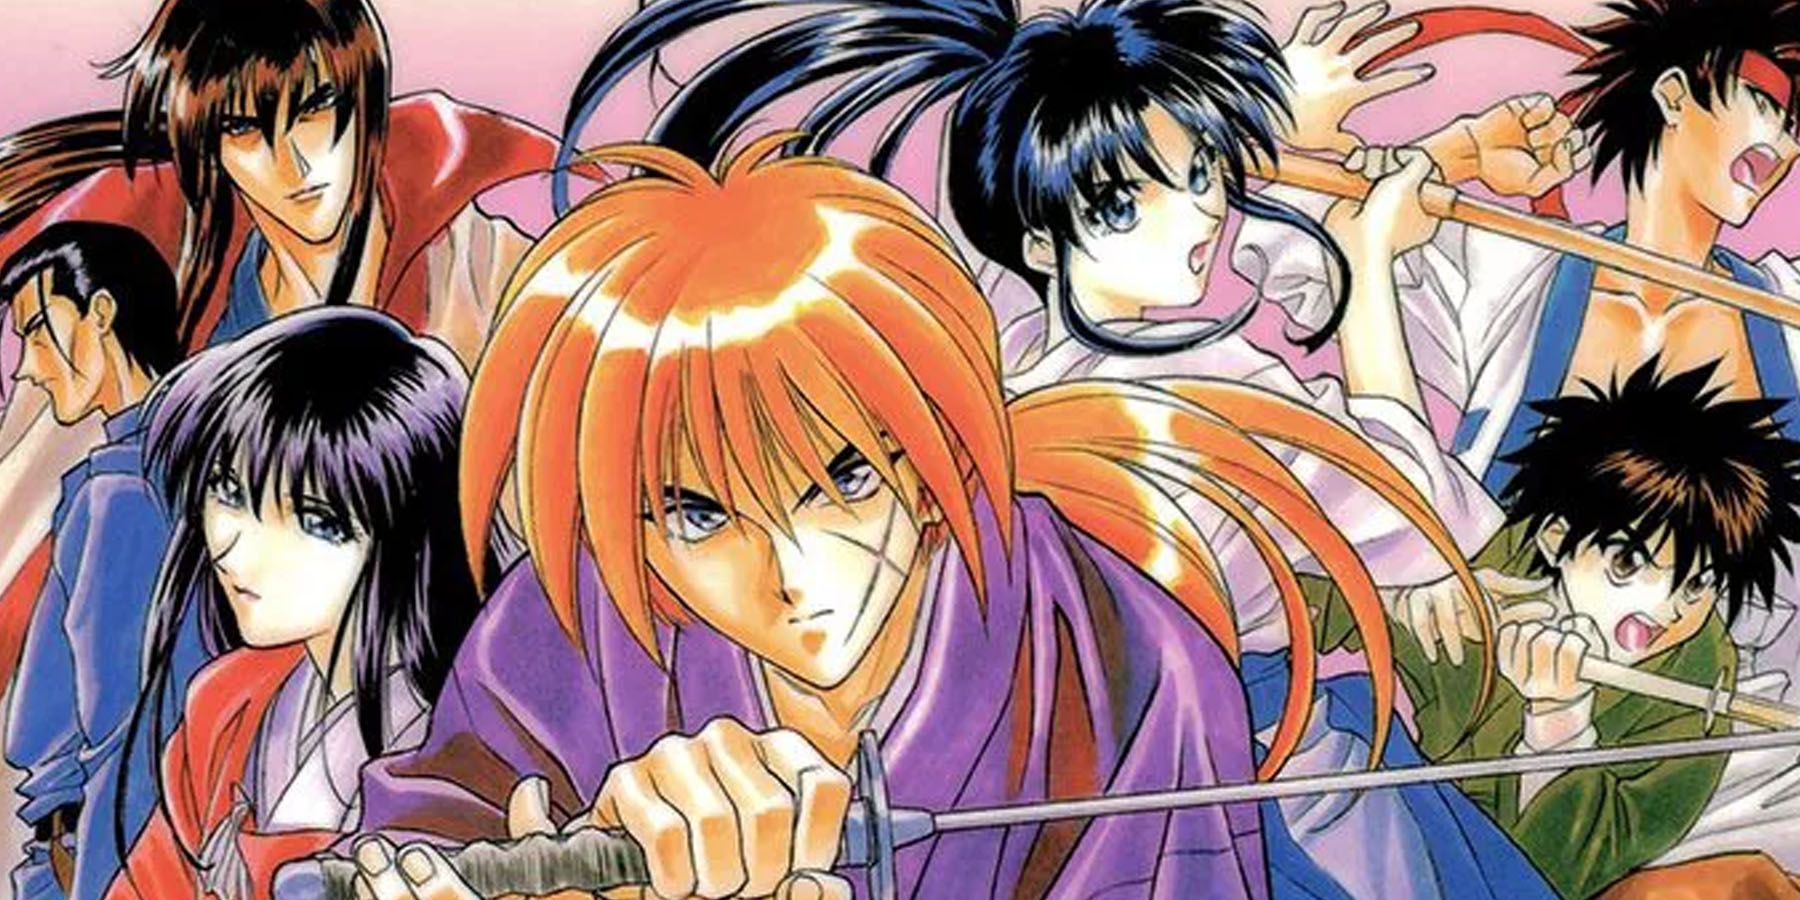 The main cast of Ruroni Kenshin